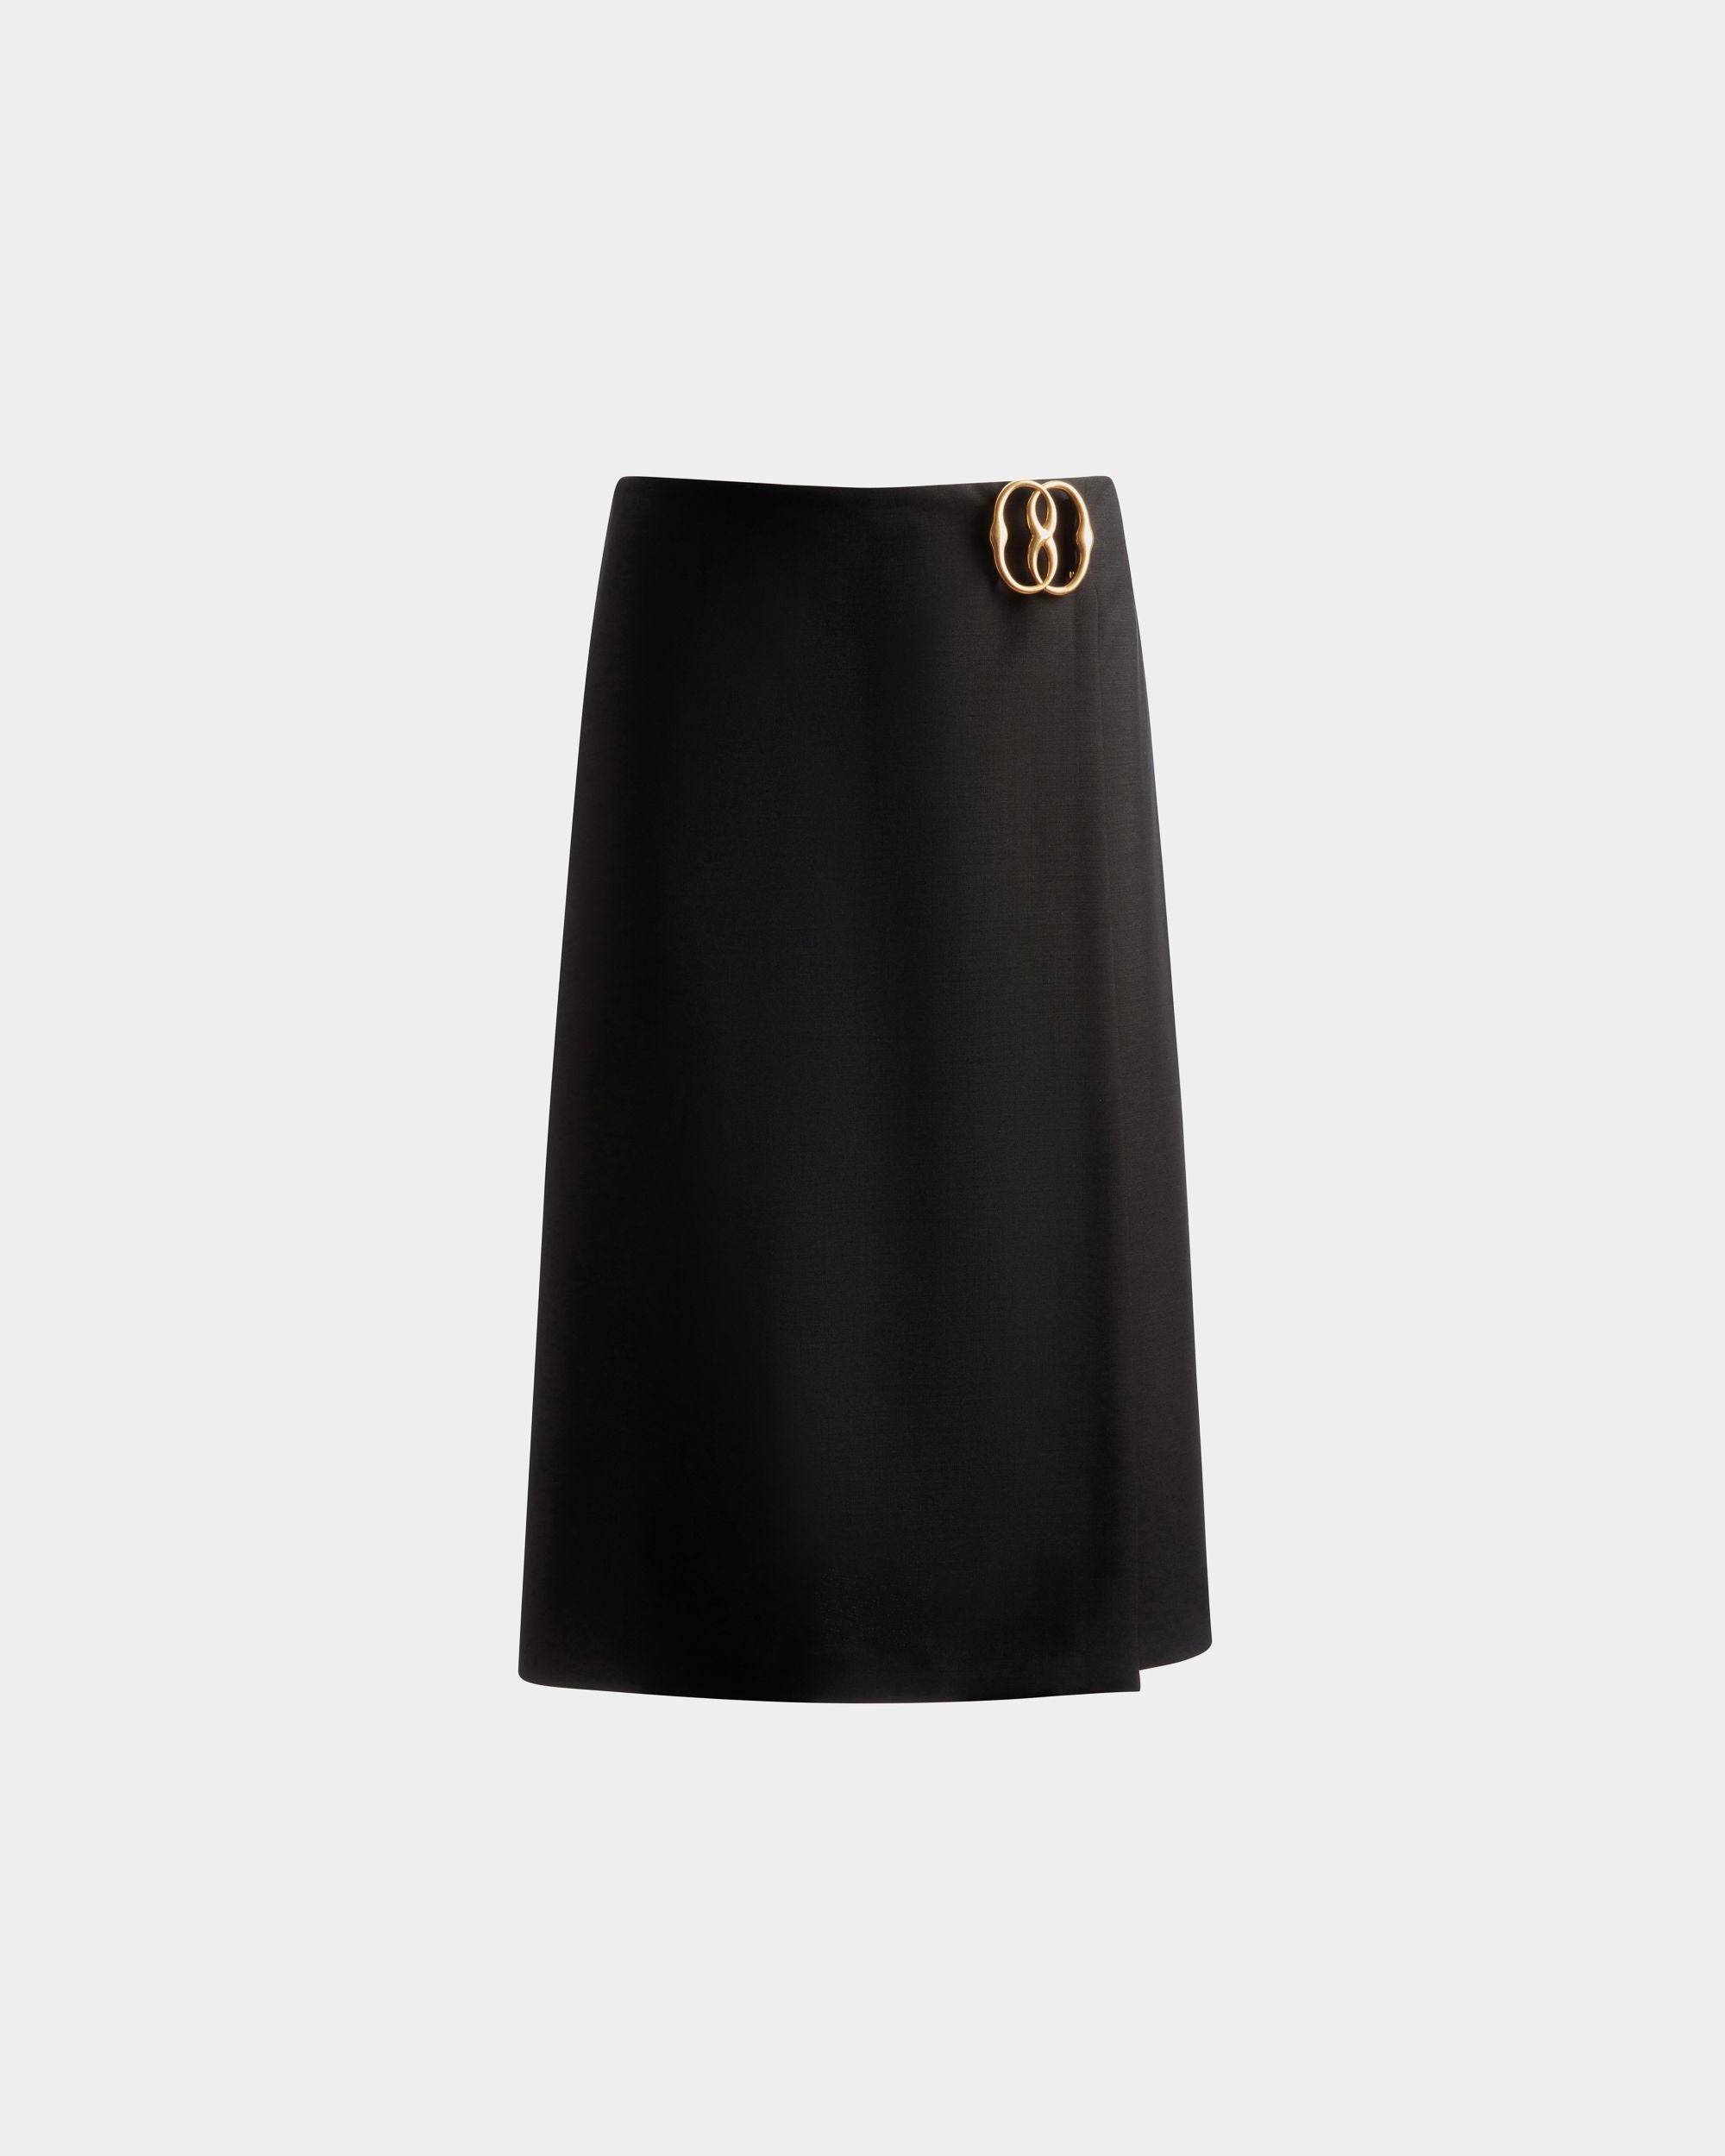 Knee Length Wrap Skirt | Women's Skirt | Black Mohair Wool Mix | Bally | Still Life Front